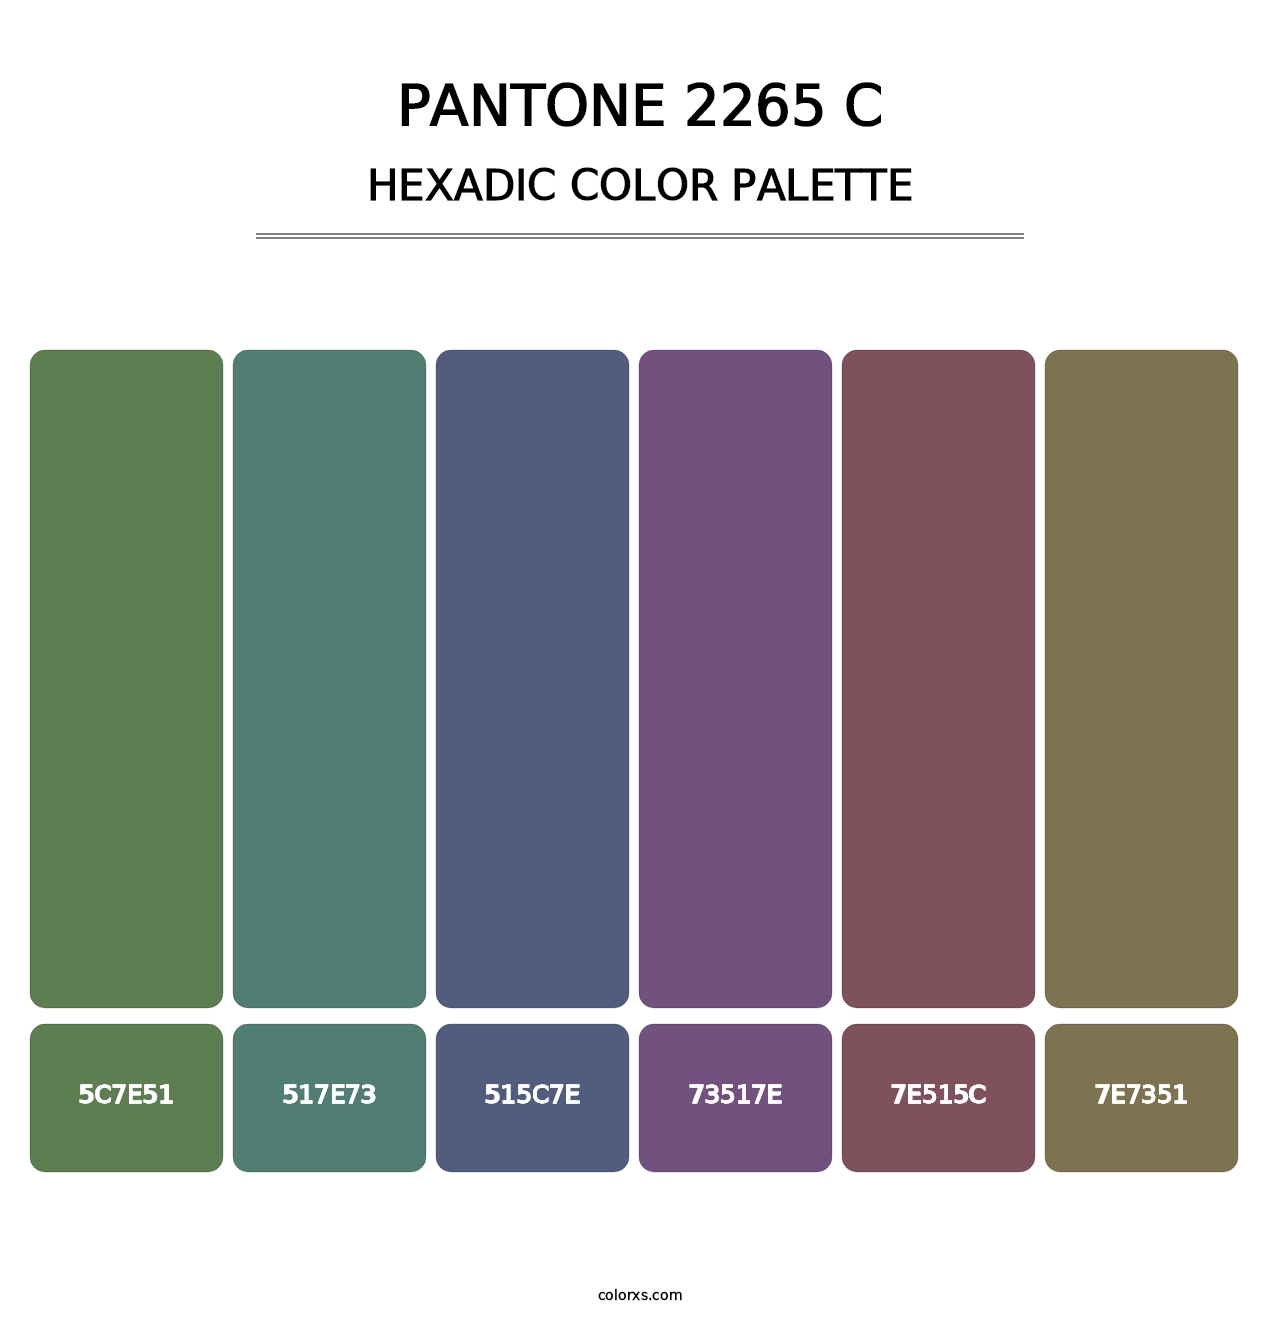 PANTONE 2265 C - Hexadic Color Palette